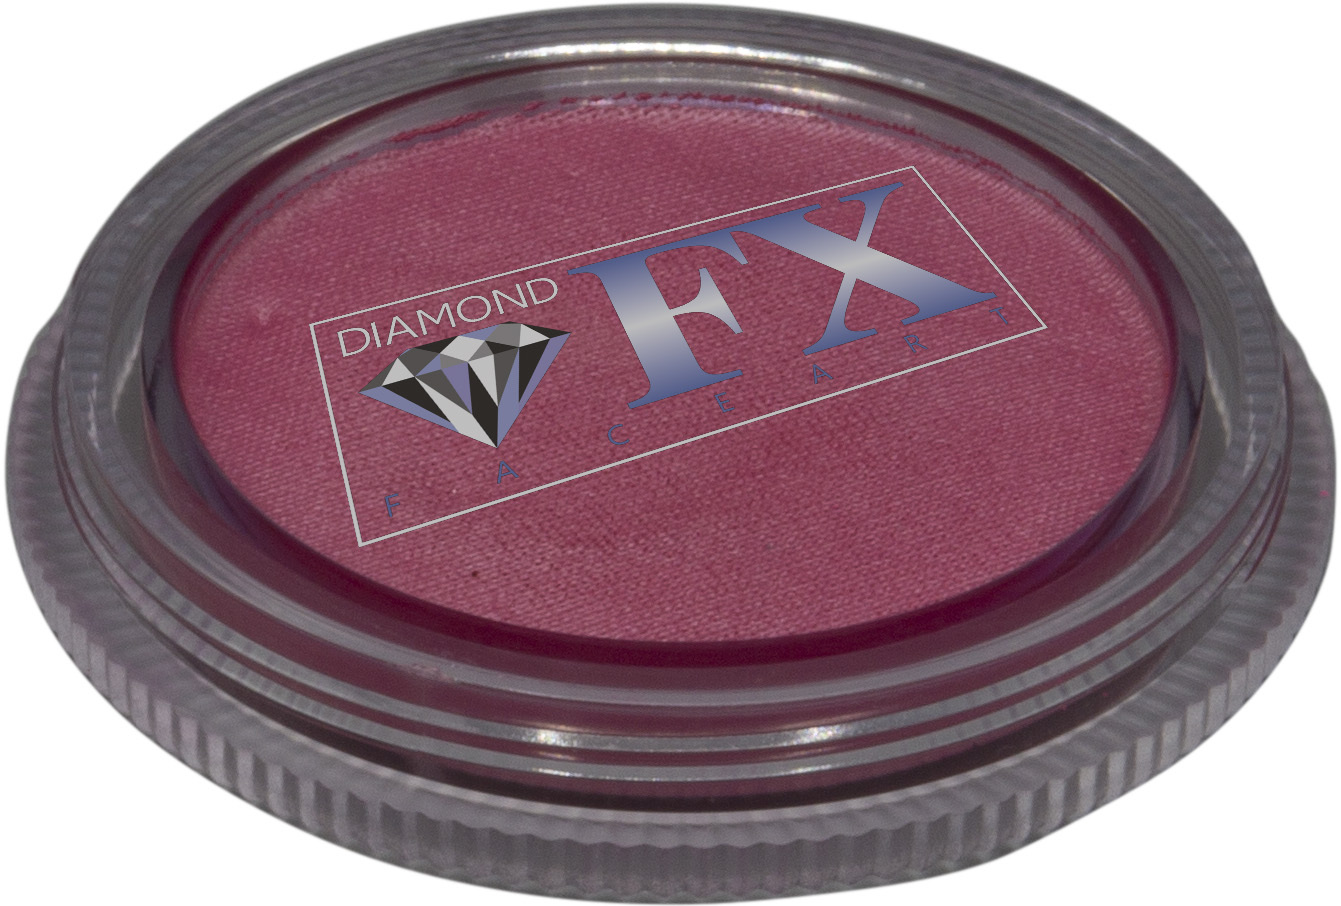 Diamond FX Raspberry Metallic 30g - Small Image